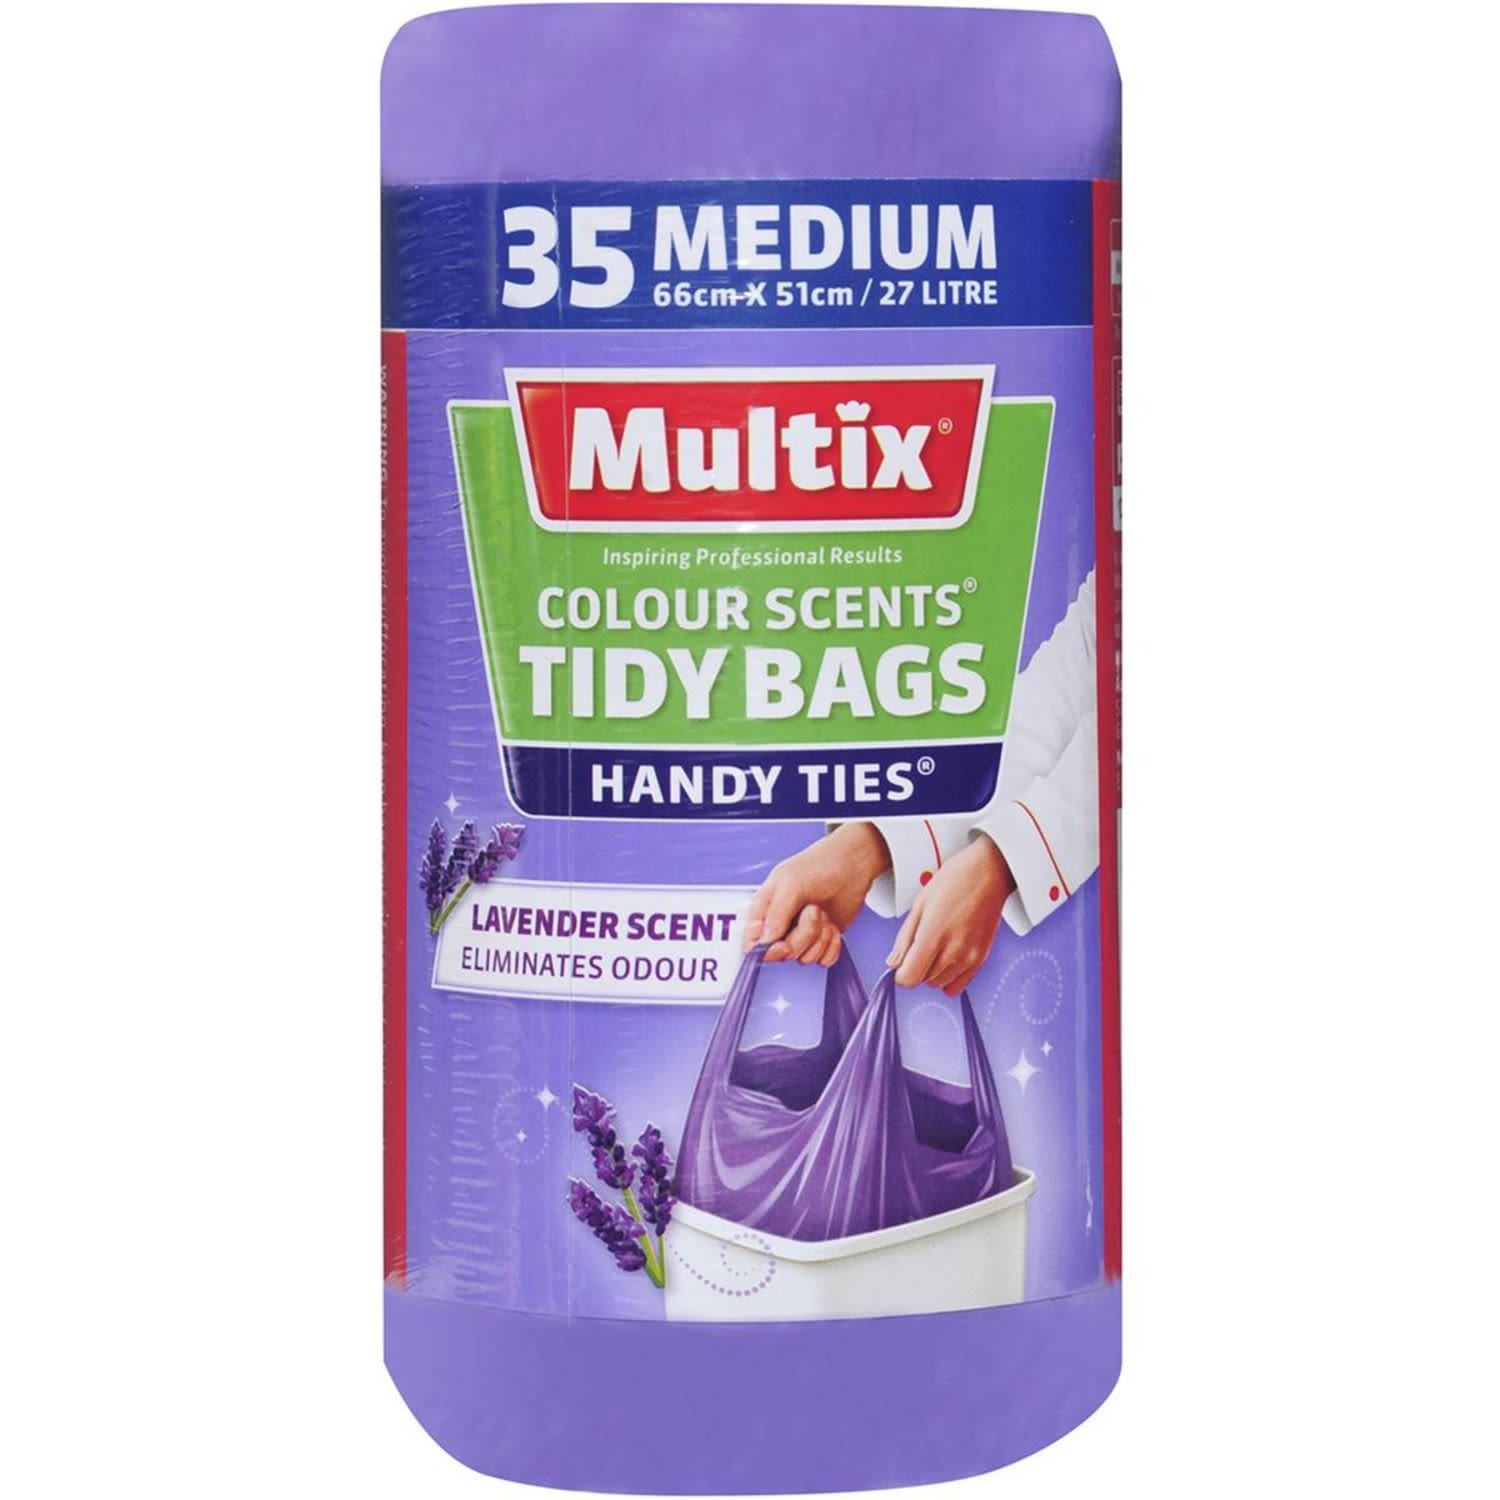 Multix Colour Scents Handy Ties Tidy Bags Medium Lavender Scent, 35 Each